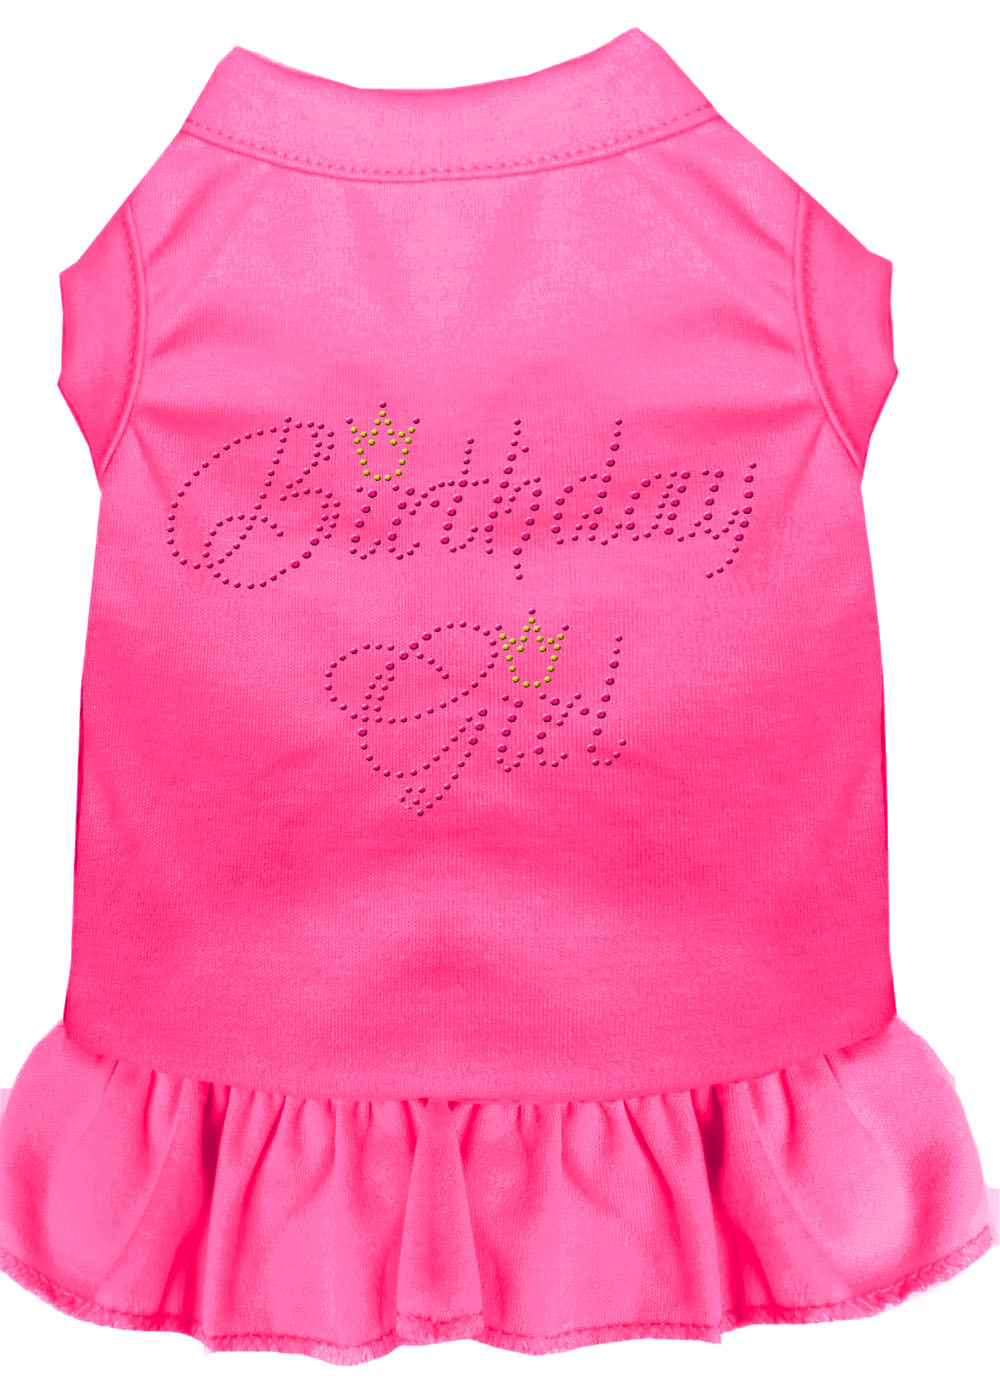 Birthday Girl Rhinestone Dress Bright Pink XL